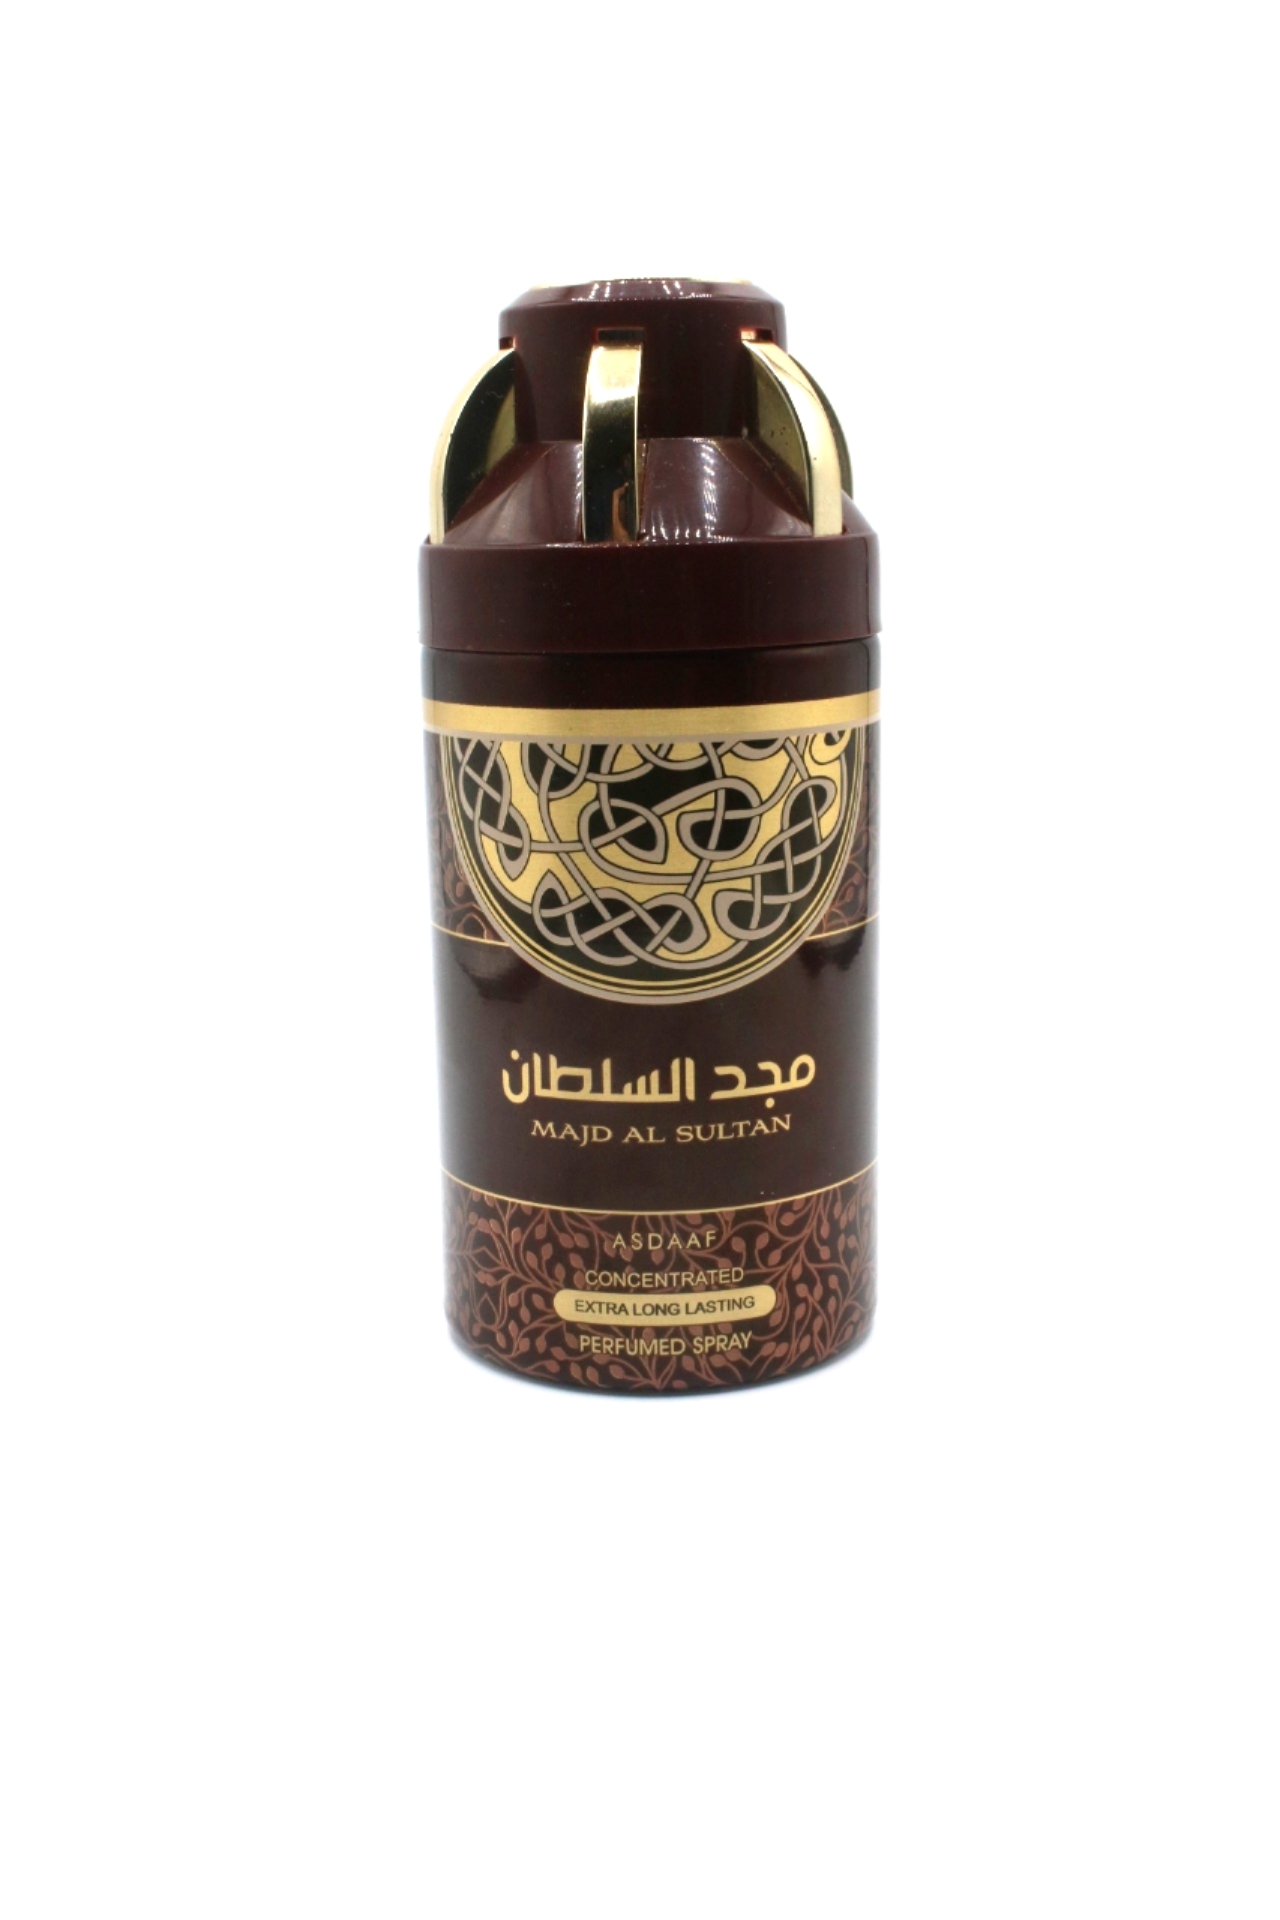 Asdaaf Majd Al Sultan Concentrated Extra Long Lasting Perfume